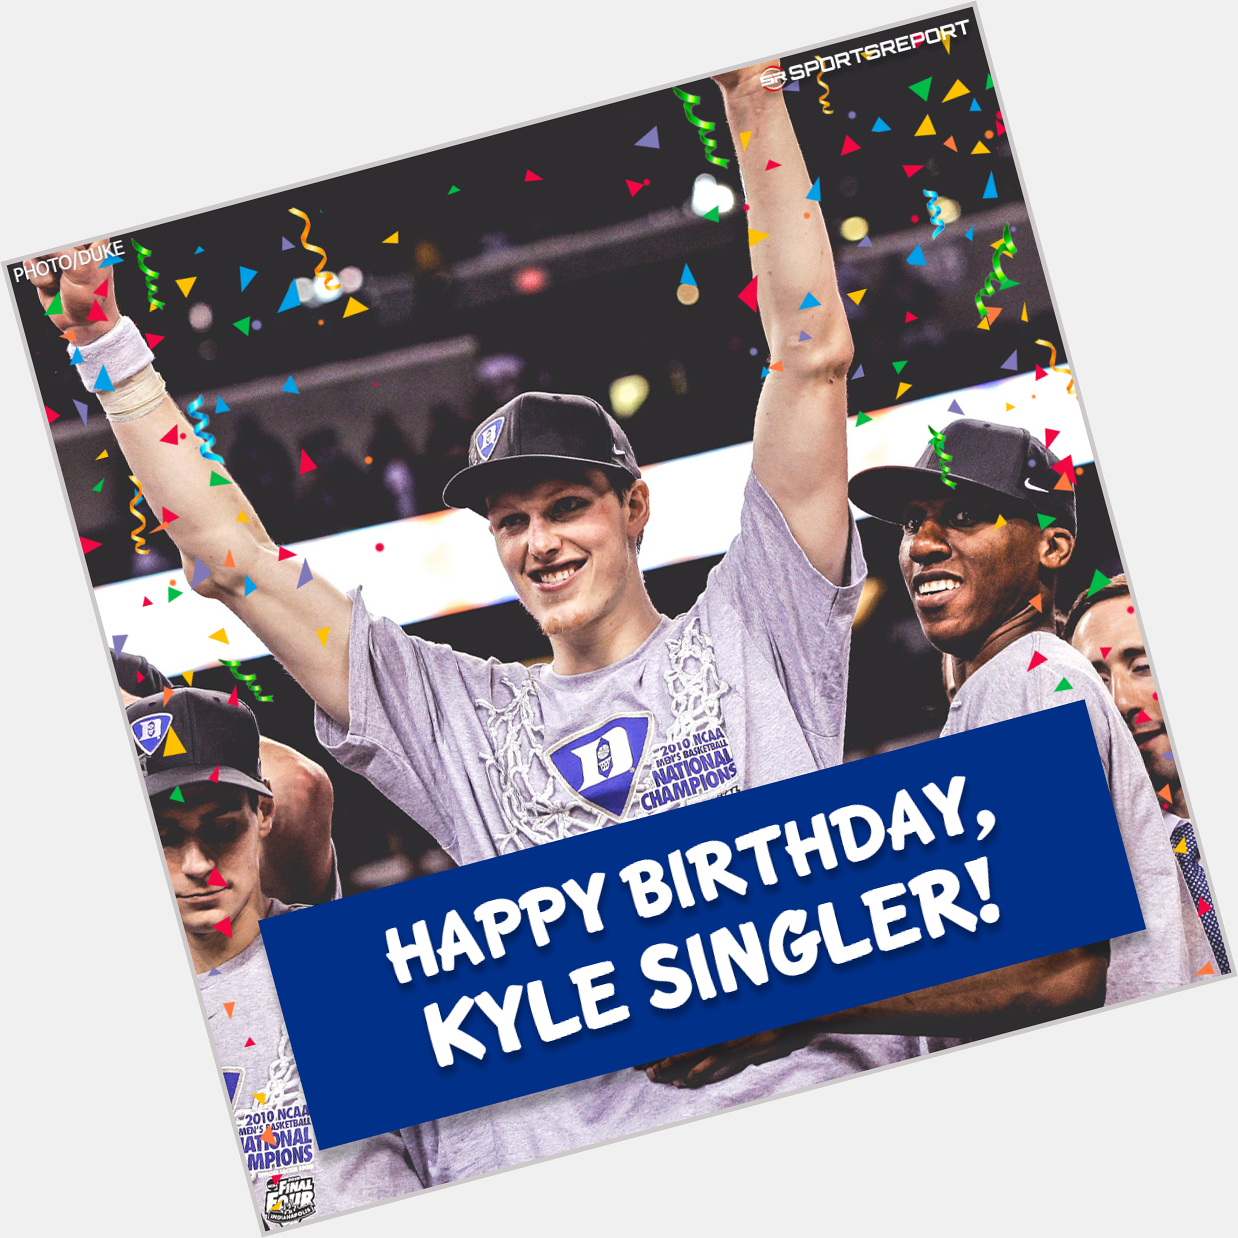 Happy Birthday to Legend, Kyle Singler! 